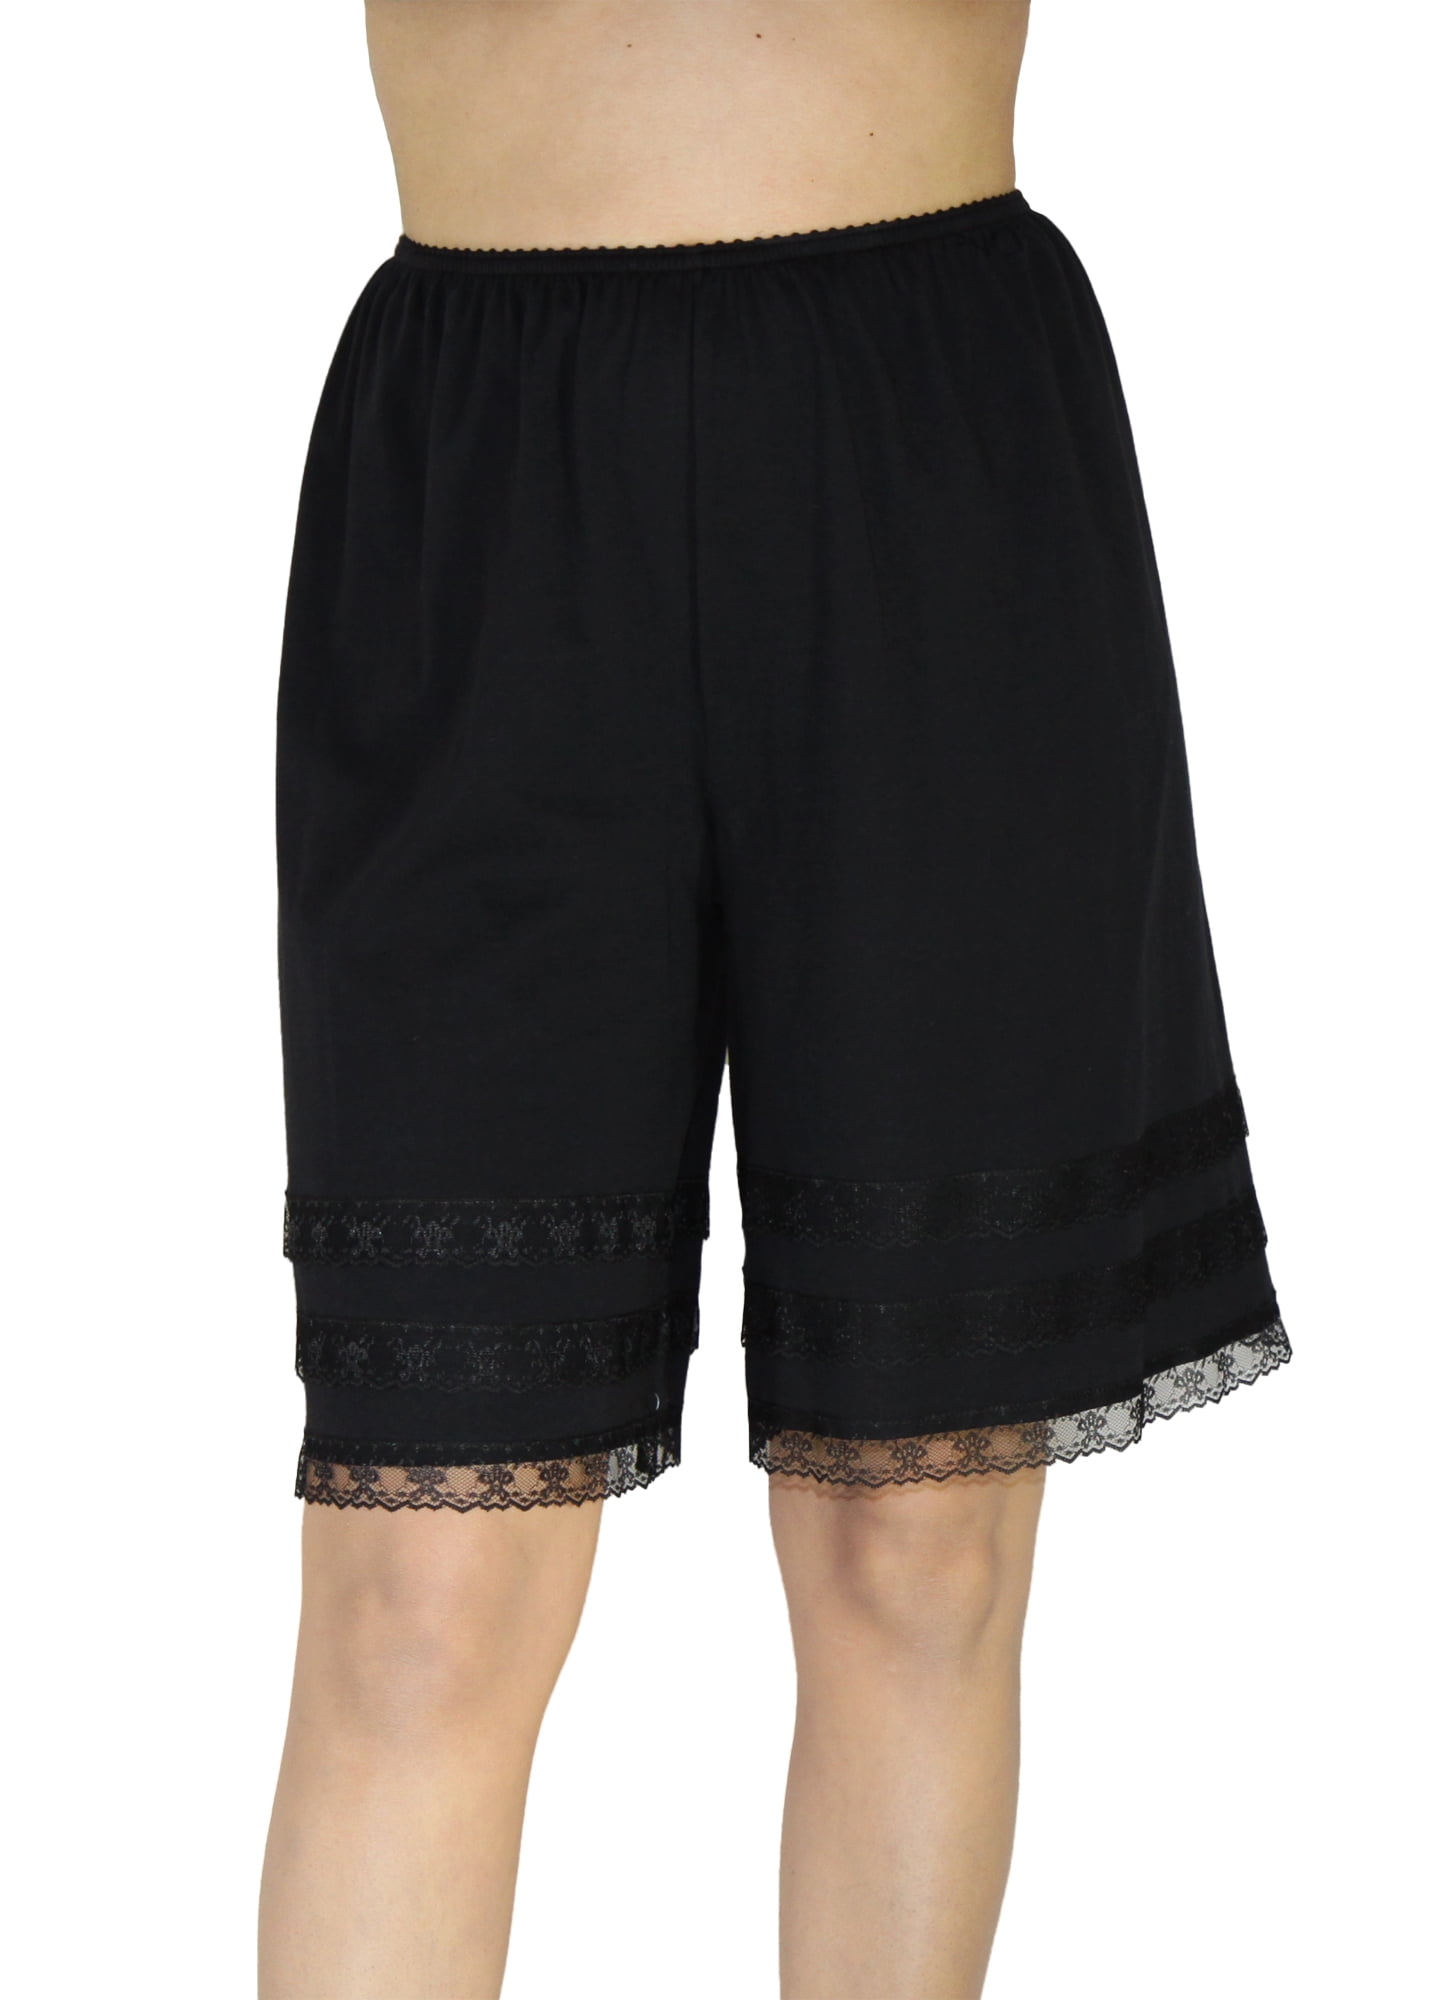 Underworks Pettipants Nylon Culotte Slip Bloomers Split Skirt 4-inch Inseam 3-Pack